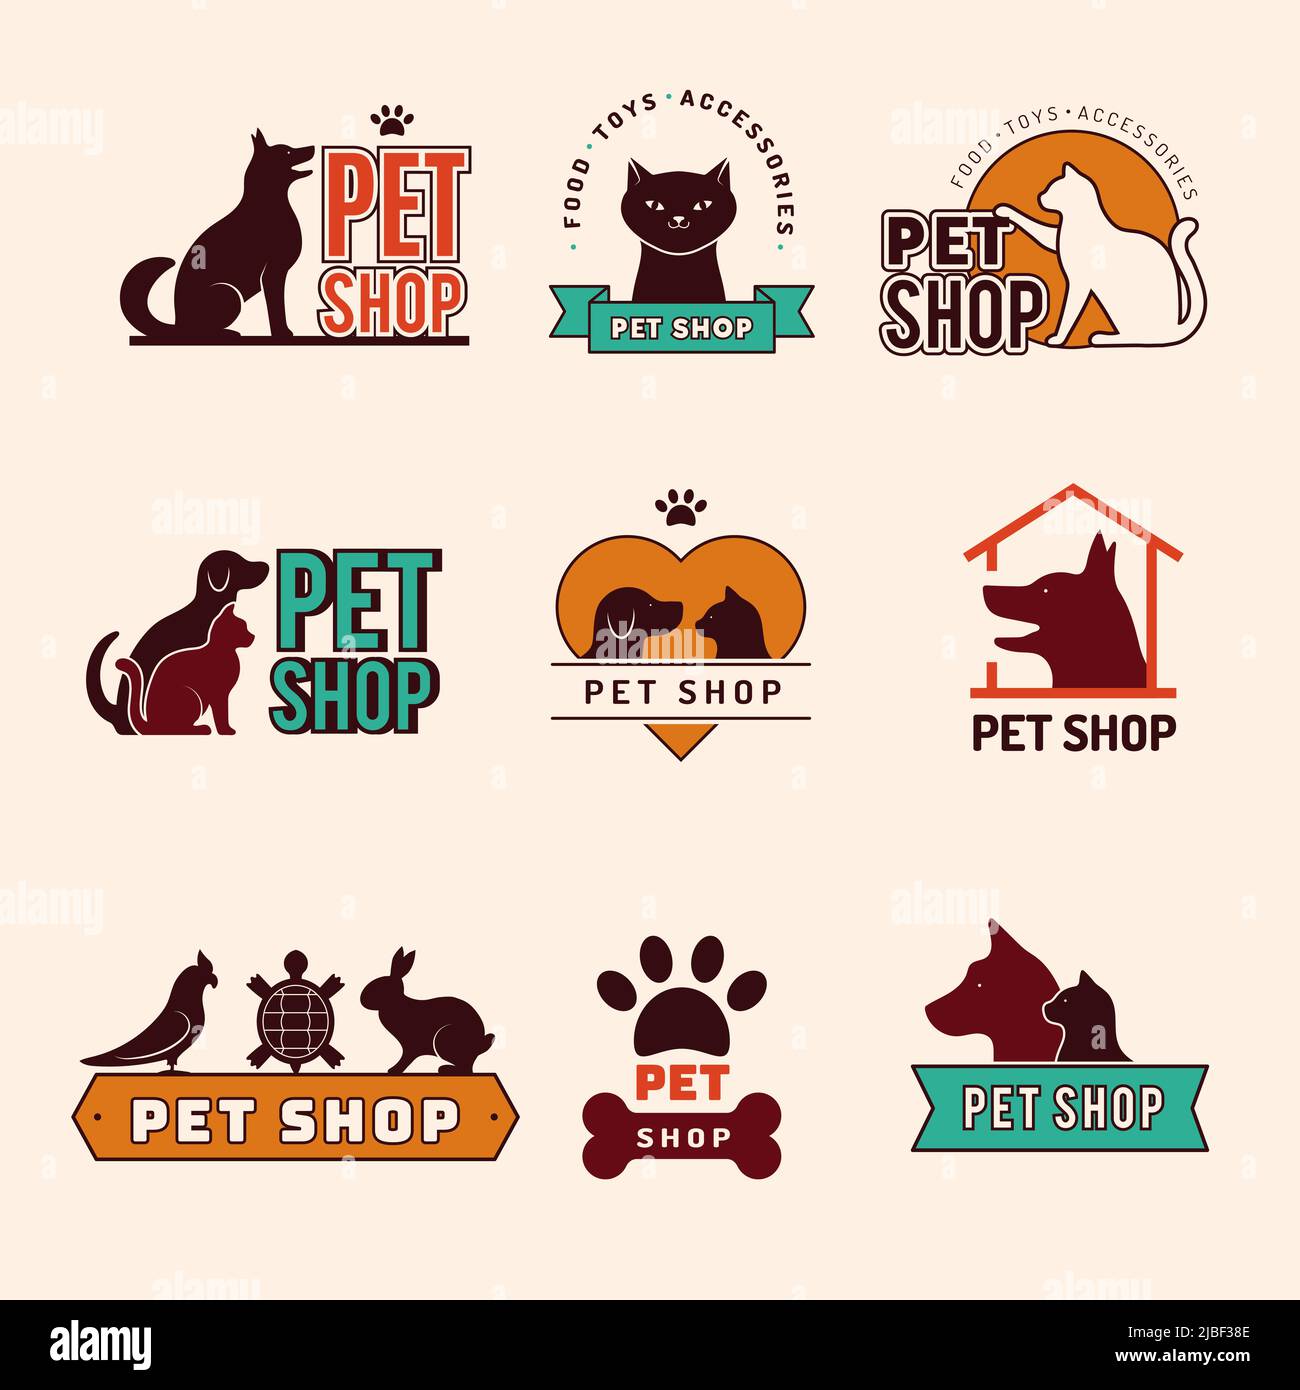 pet shop logo inspiration